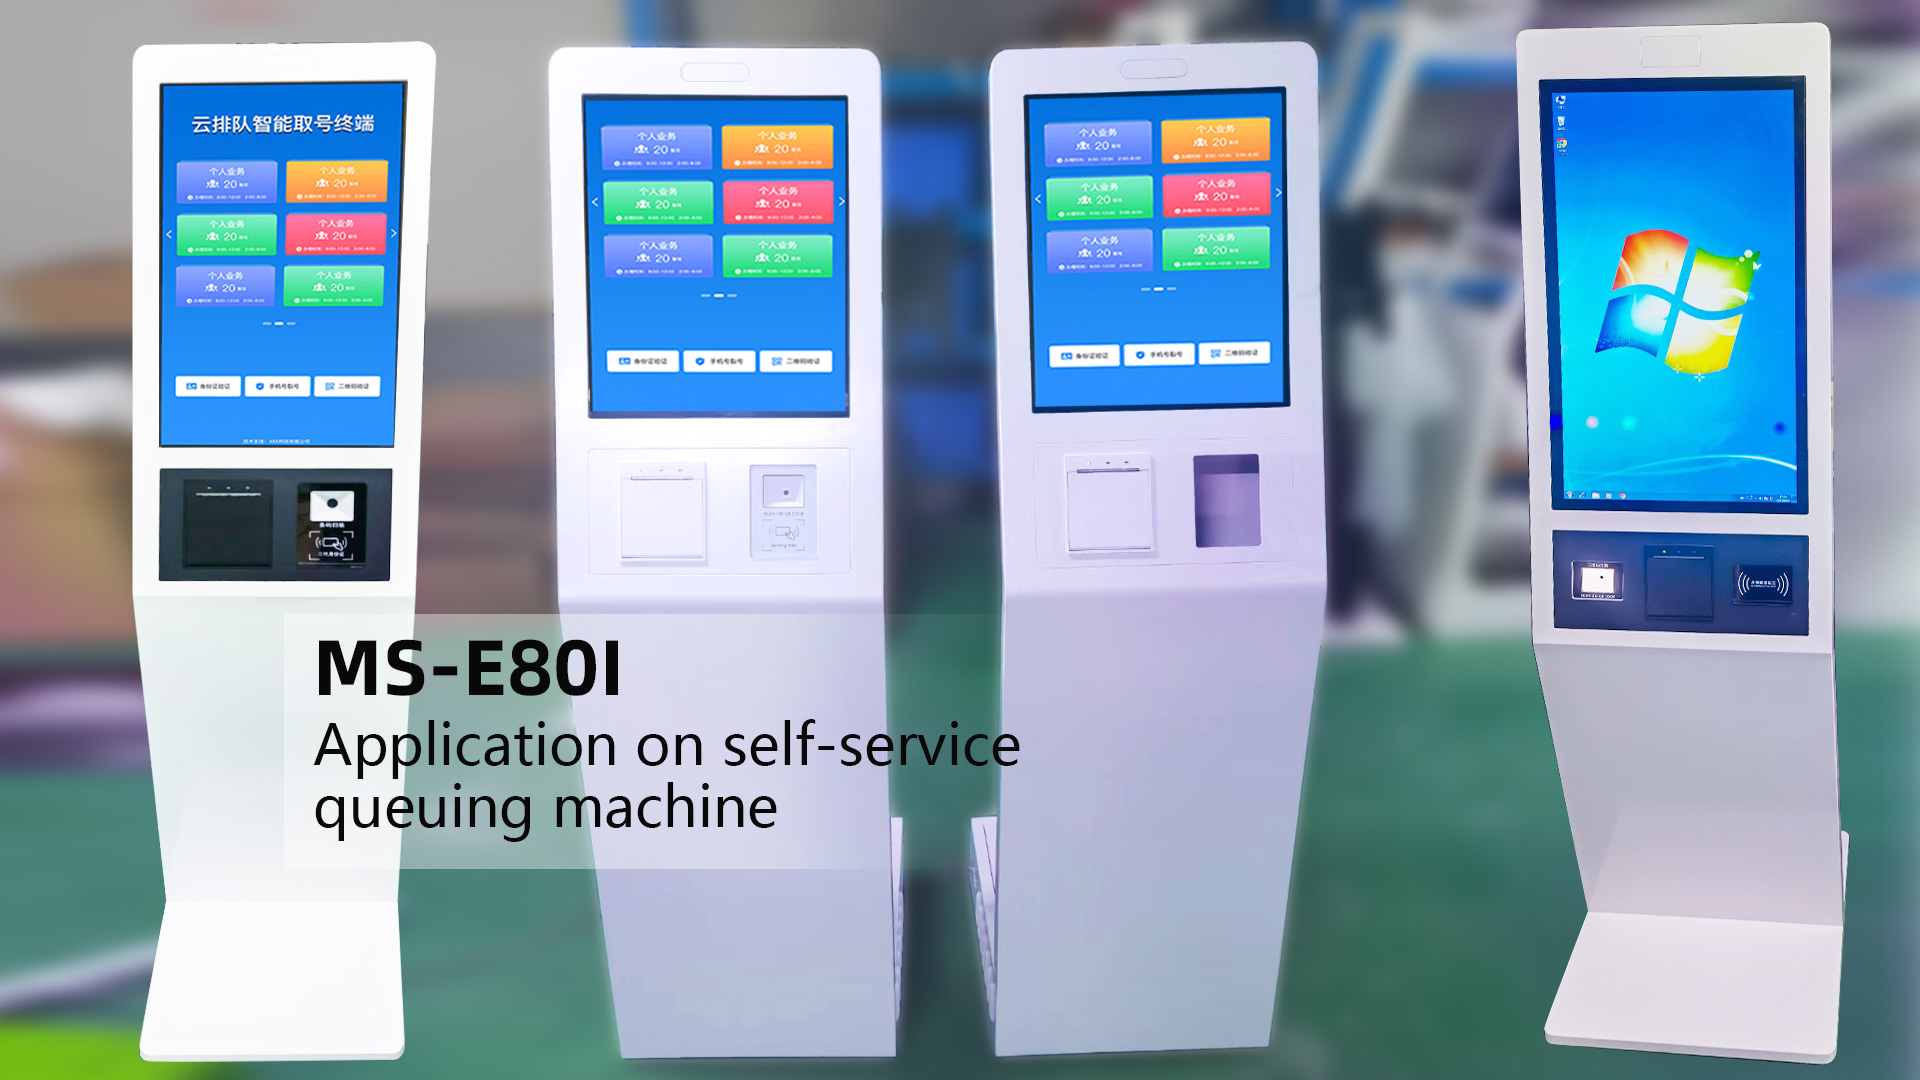 Masung printer MS-E80I assists the queuing machine